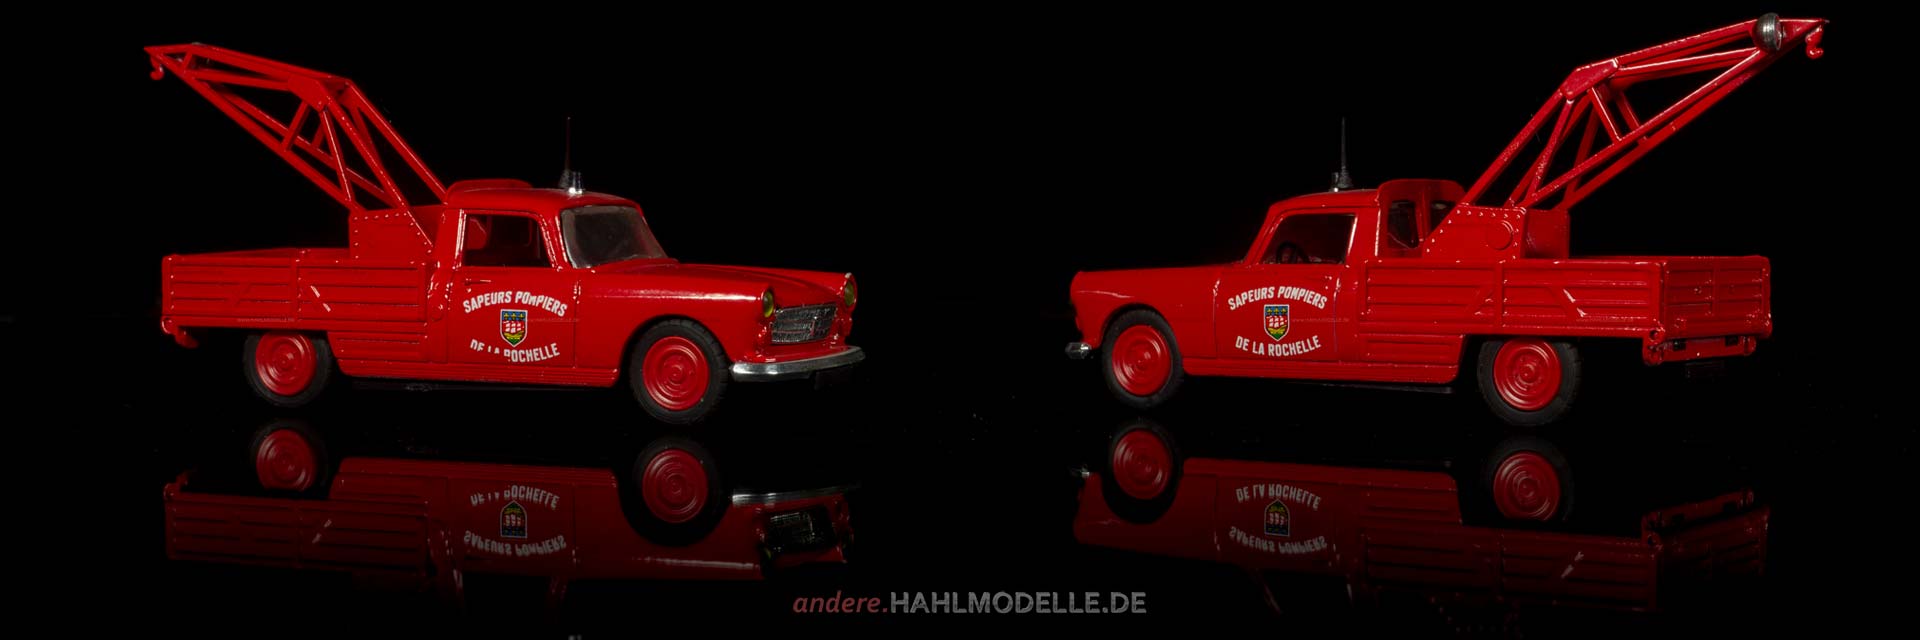 Peugeot 404 Pompiers | Abschleppwagen | Elicor | 1:43 | www.andere.hahlmodelle.de